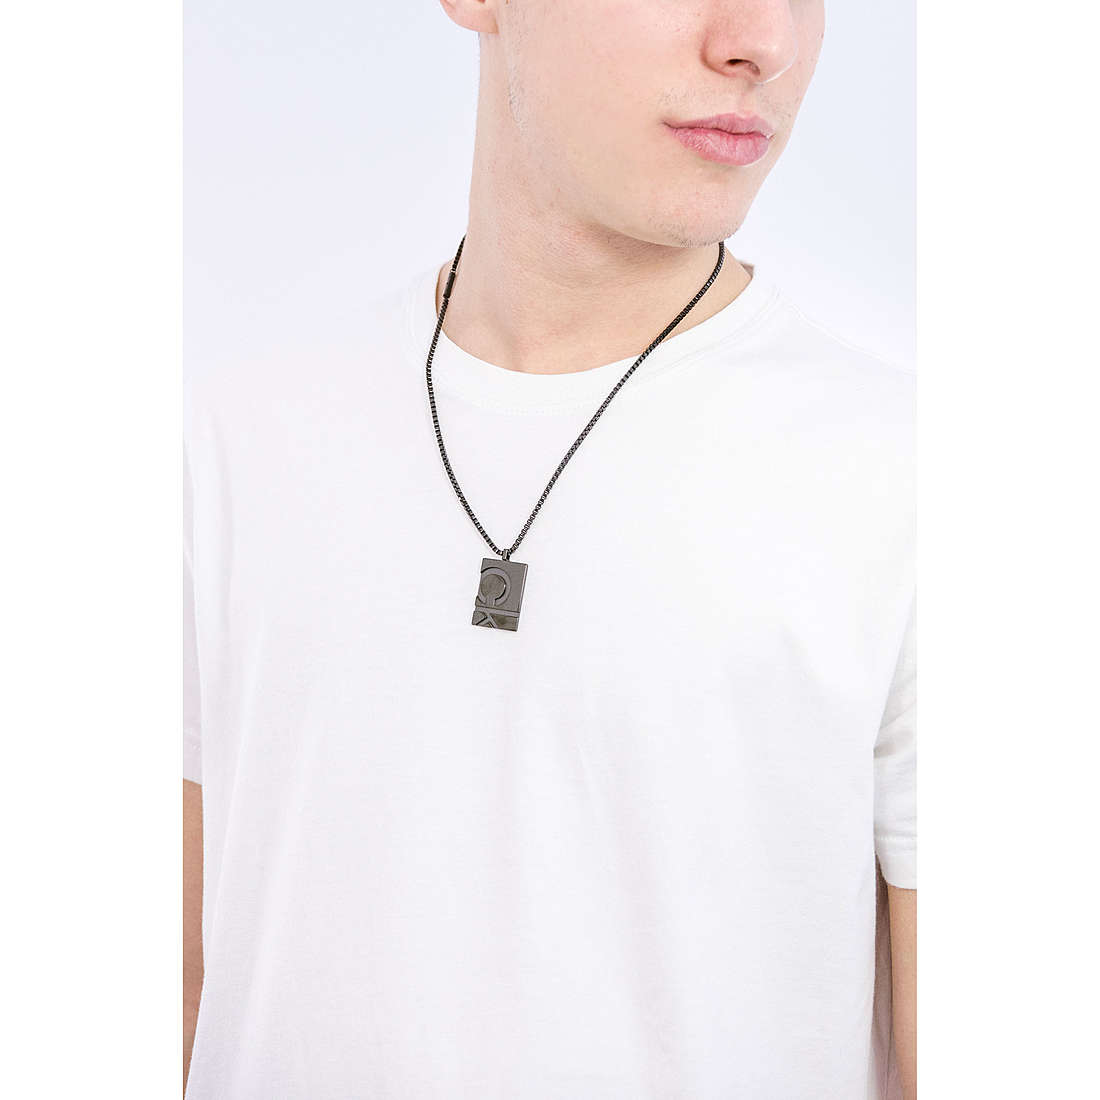 Calvin Klein necklaces man KJDUBP180100 wearing